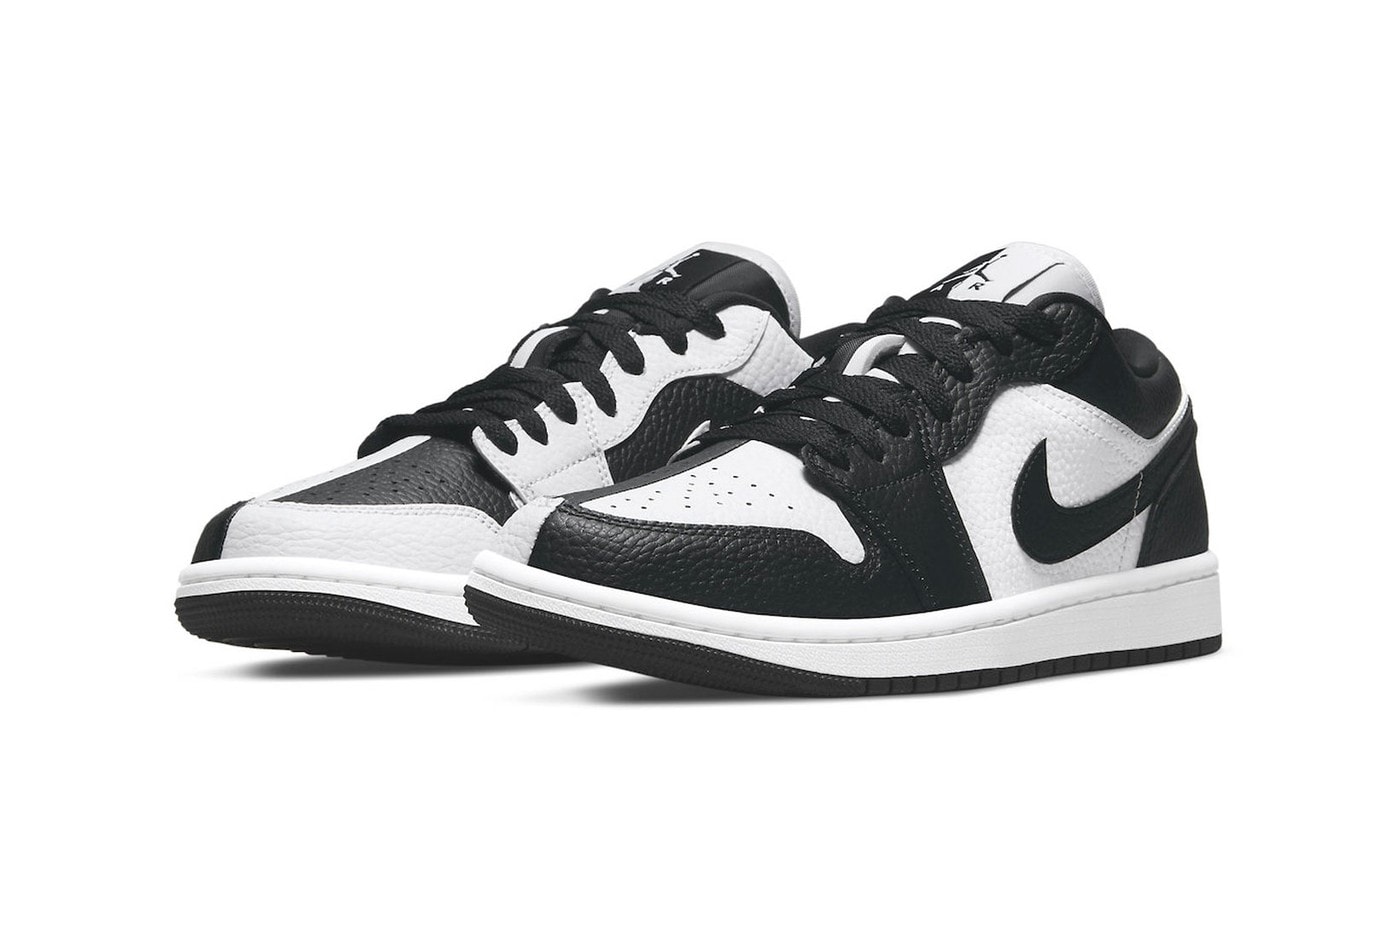 Nike Air Jordan 1 UK Popular Sneakers Trainers Footwear Online Marketplace